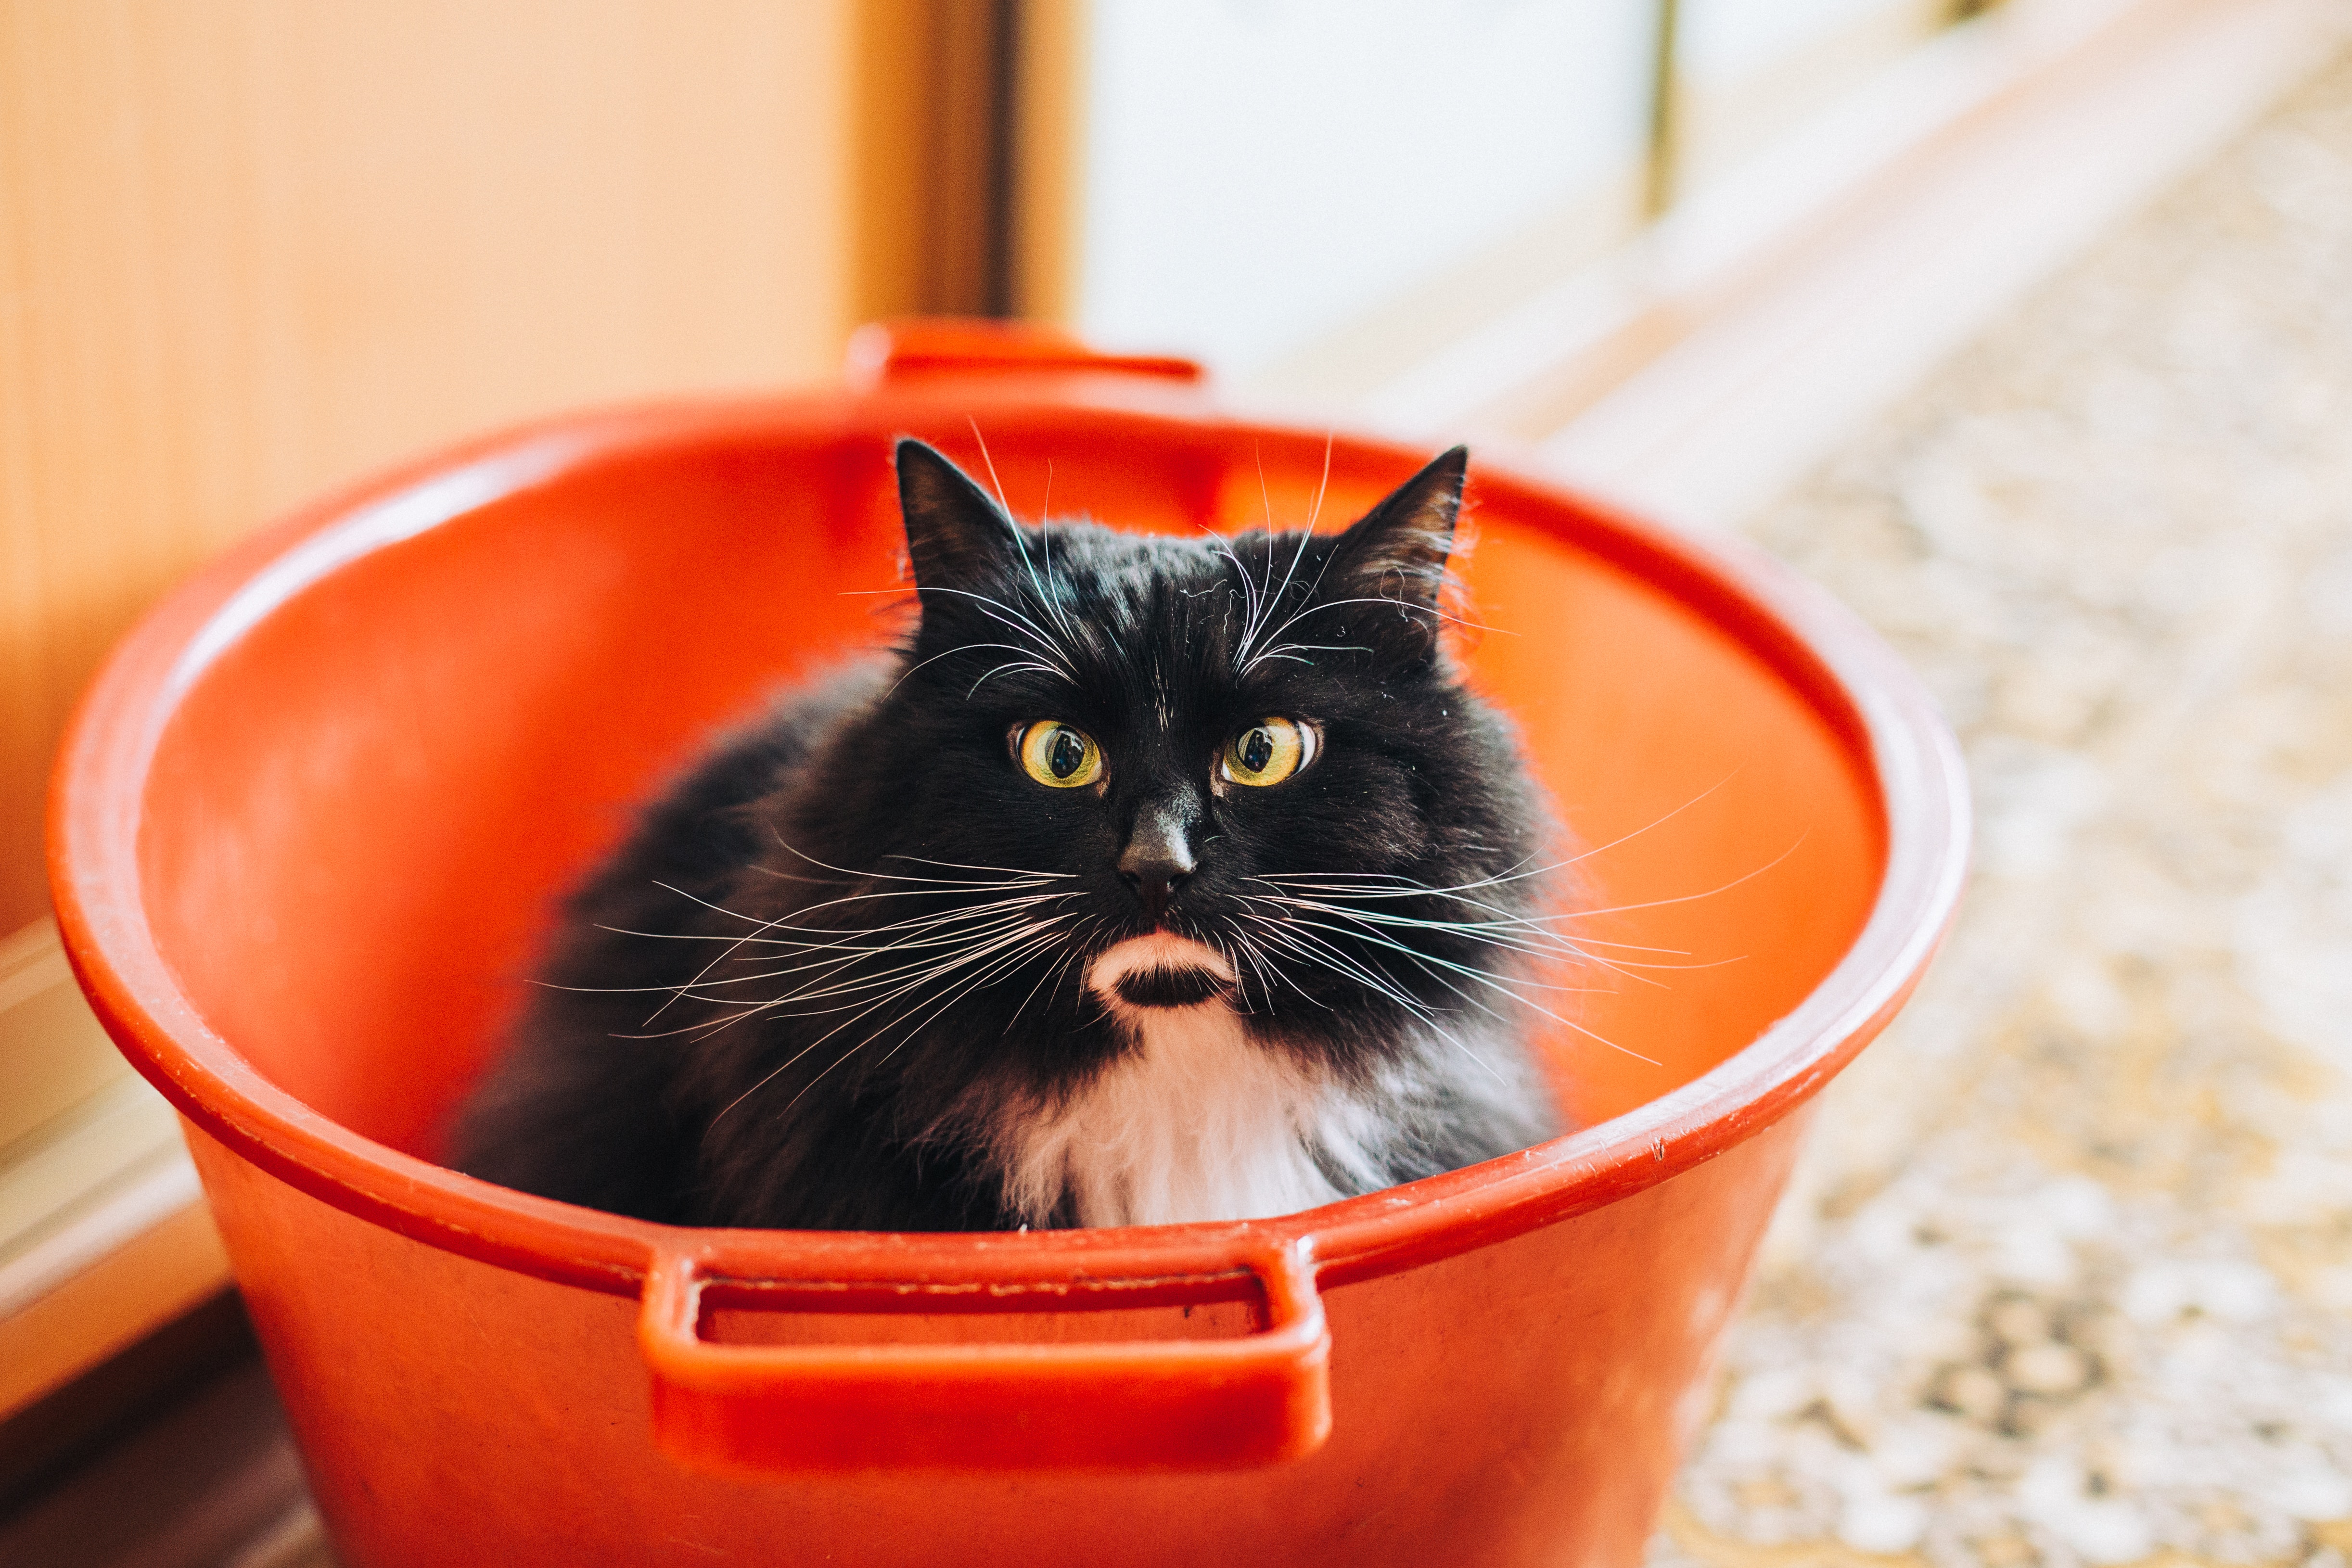 Cat sitting in red bucket